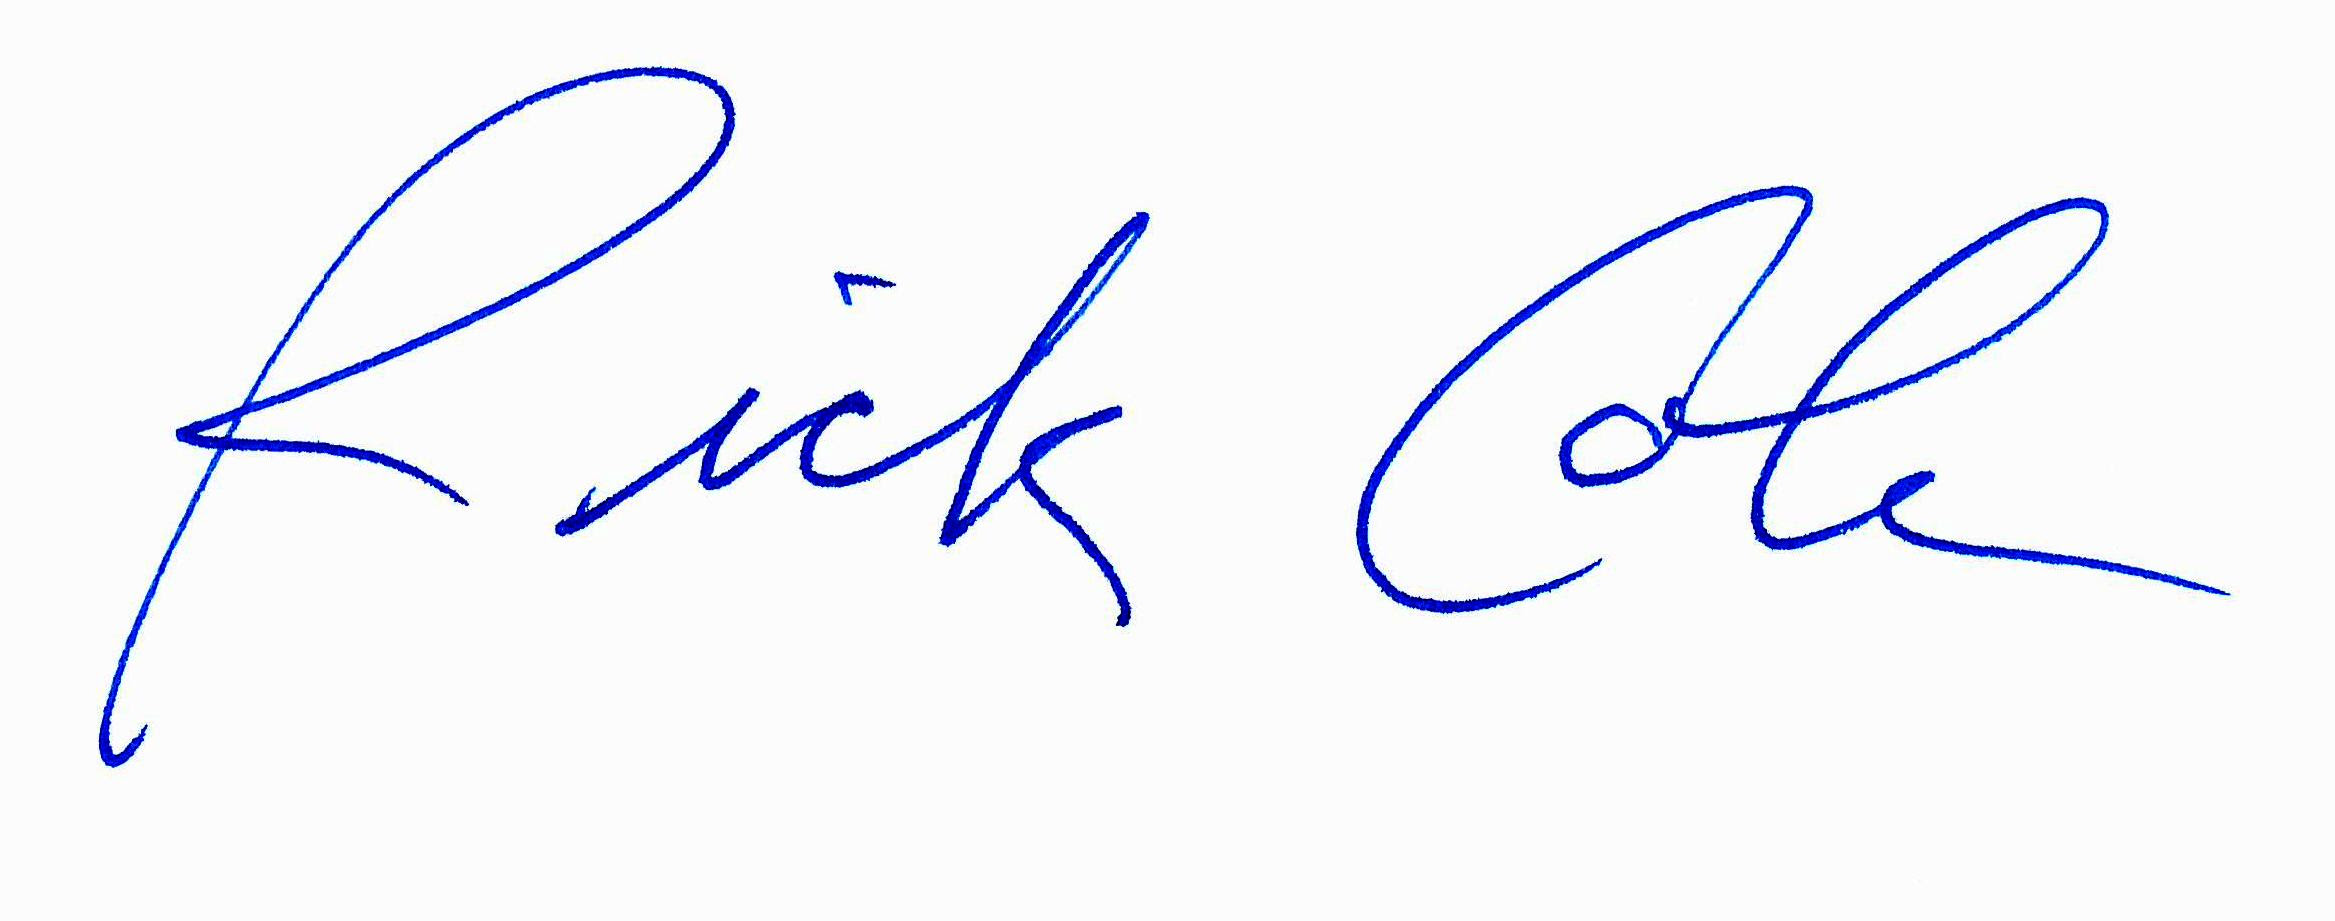 Rick Cole's signature